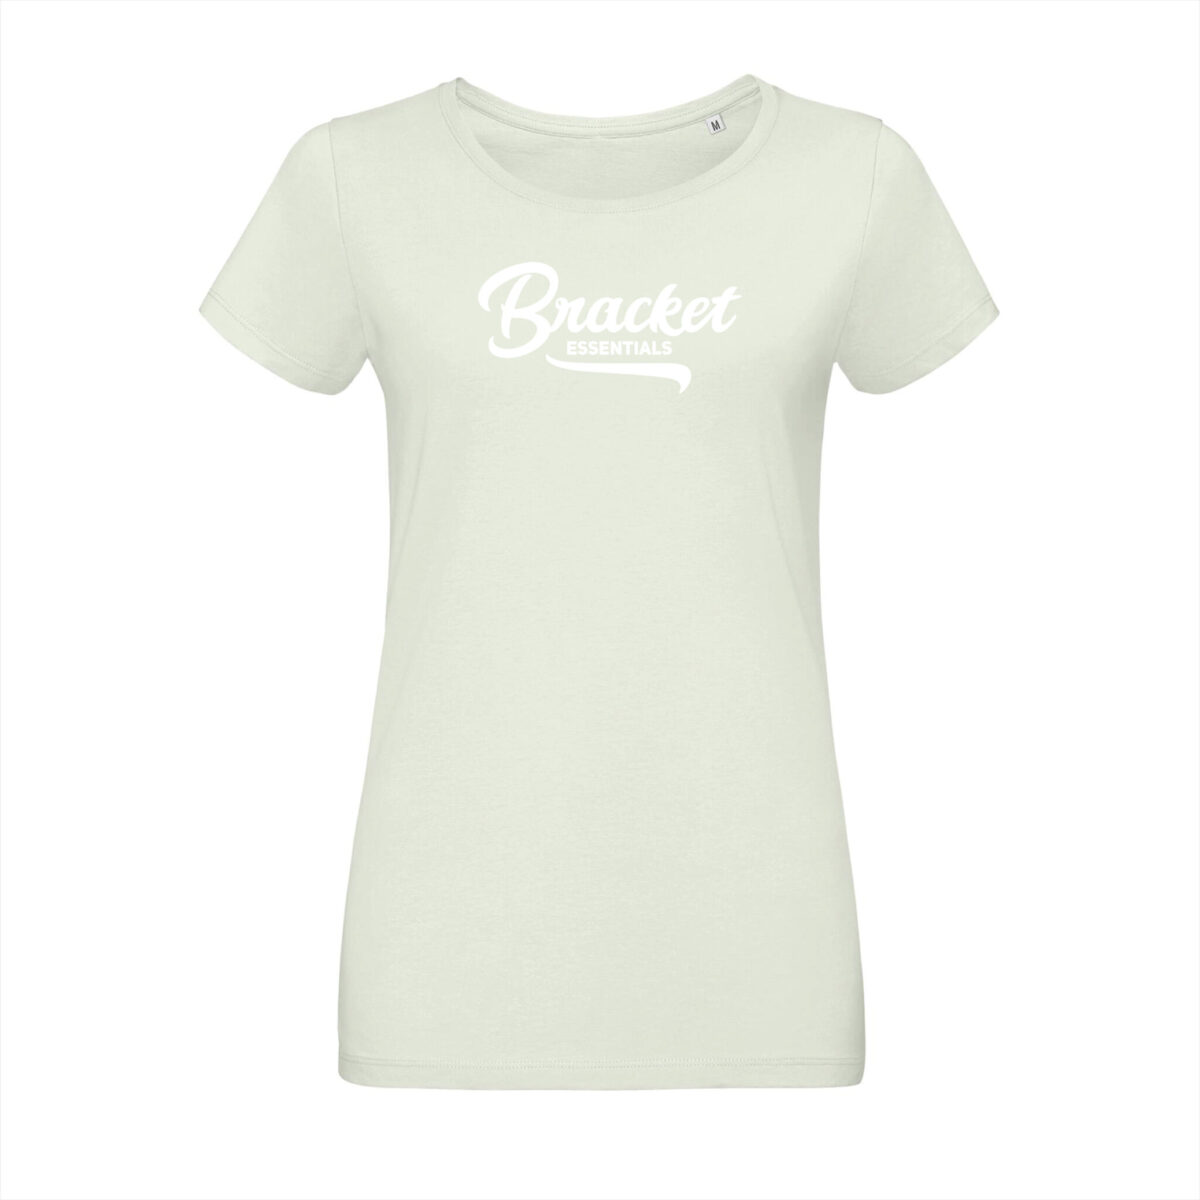 Omringd voor Geurig Bracket Essentials T-shirt Mint Groen Dames - Bracket official